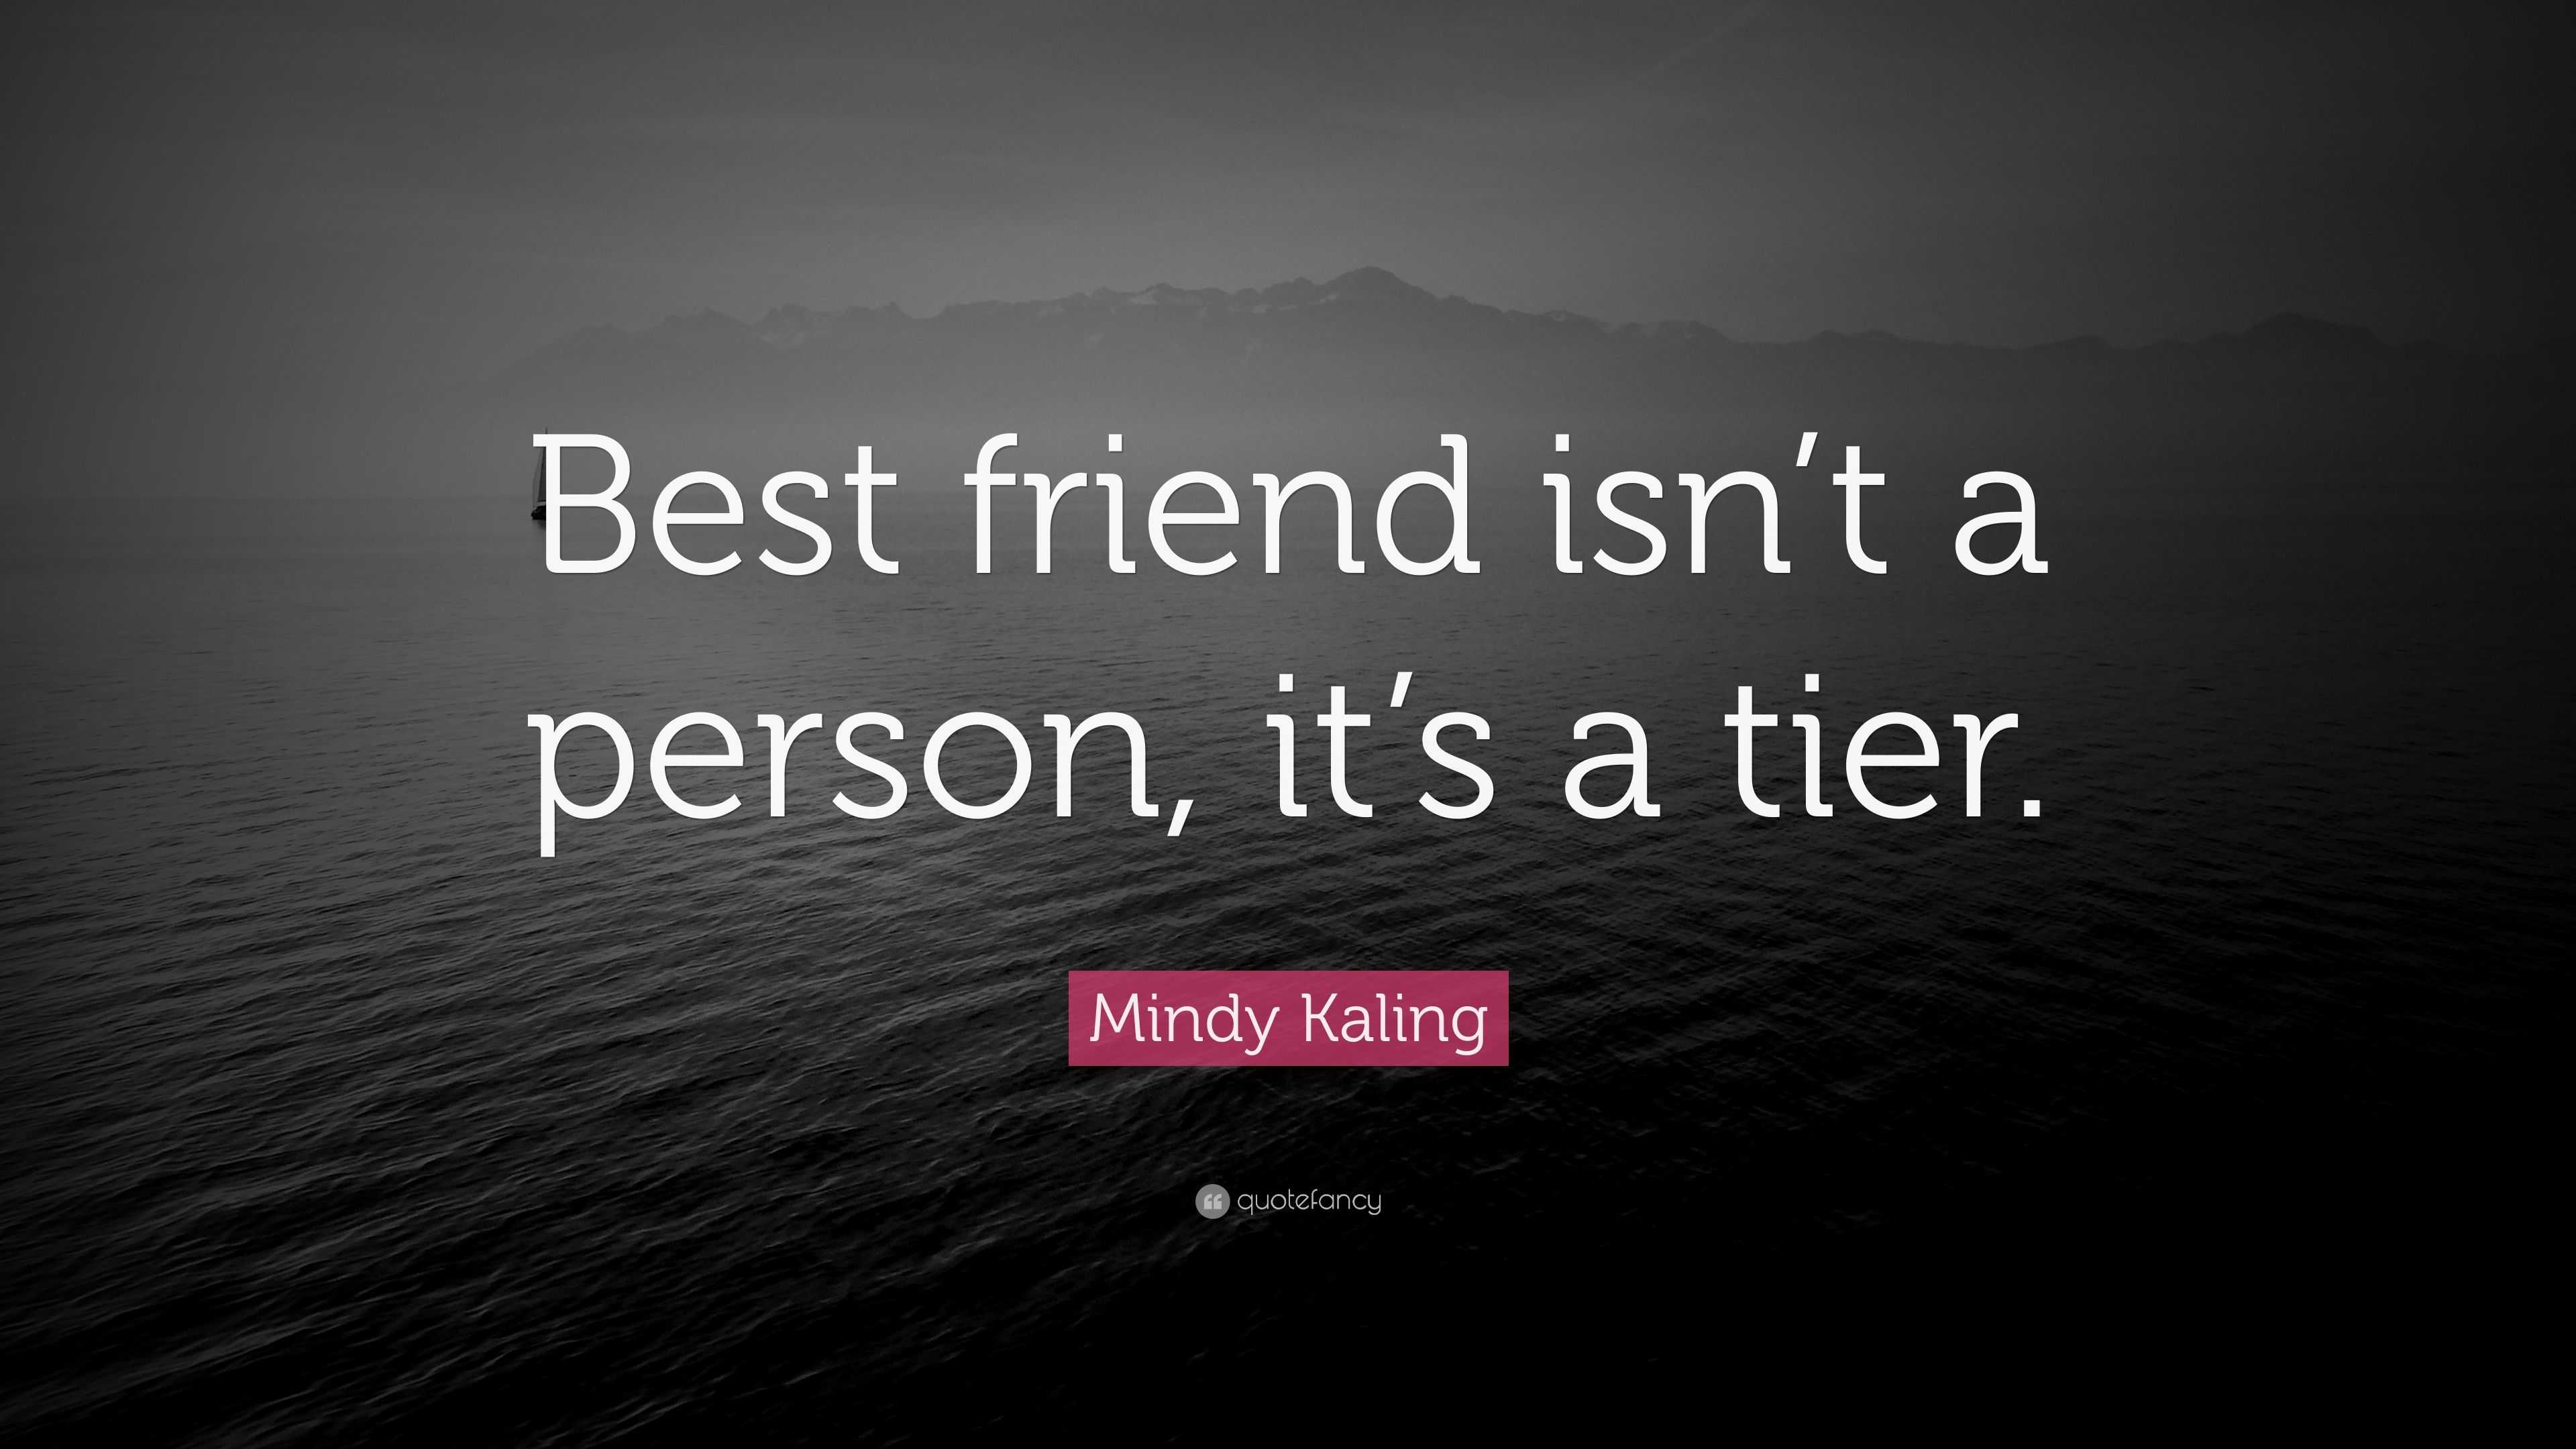 https://quotefancy.com/media/wallpaper/3840x2160/2310512-Mindy-Kaling-Quote-Best-friend-isn-t-a-person-it-s-a-tier.jpg